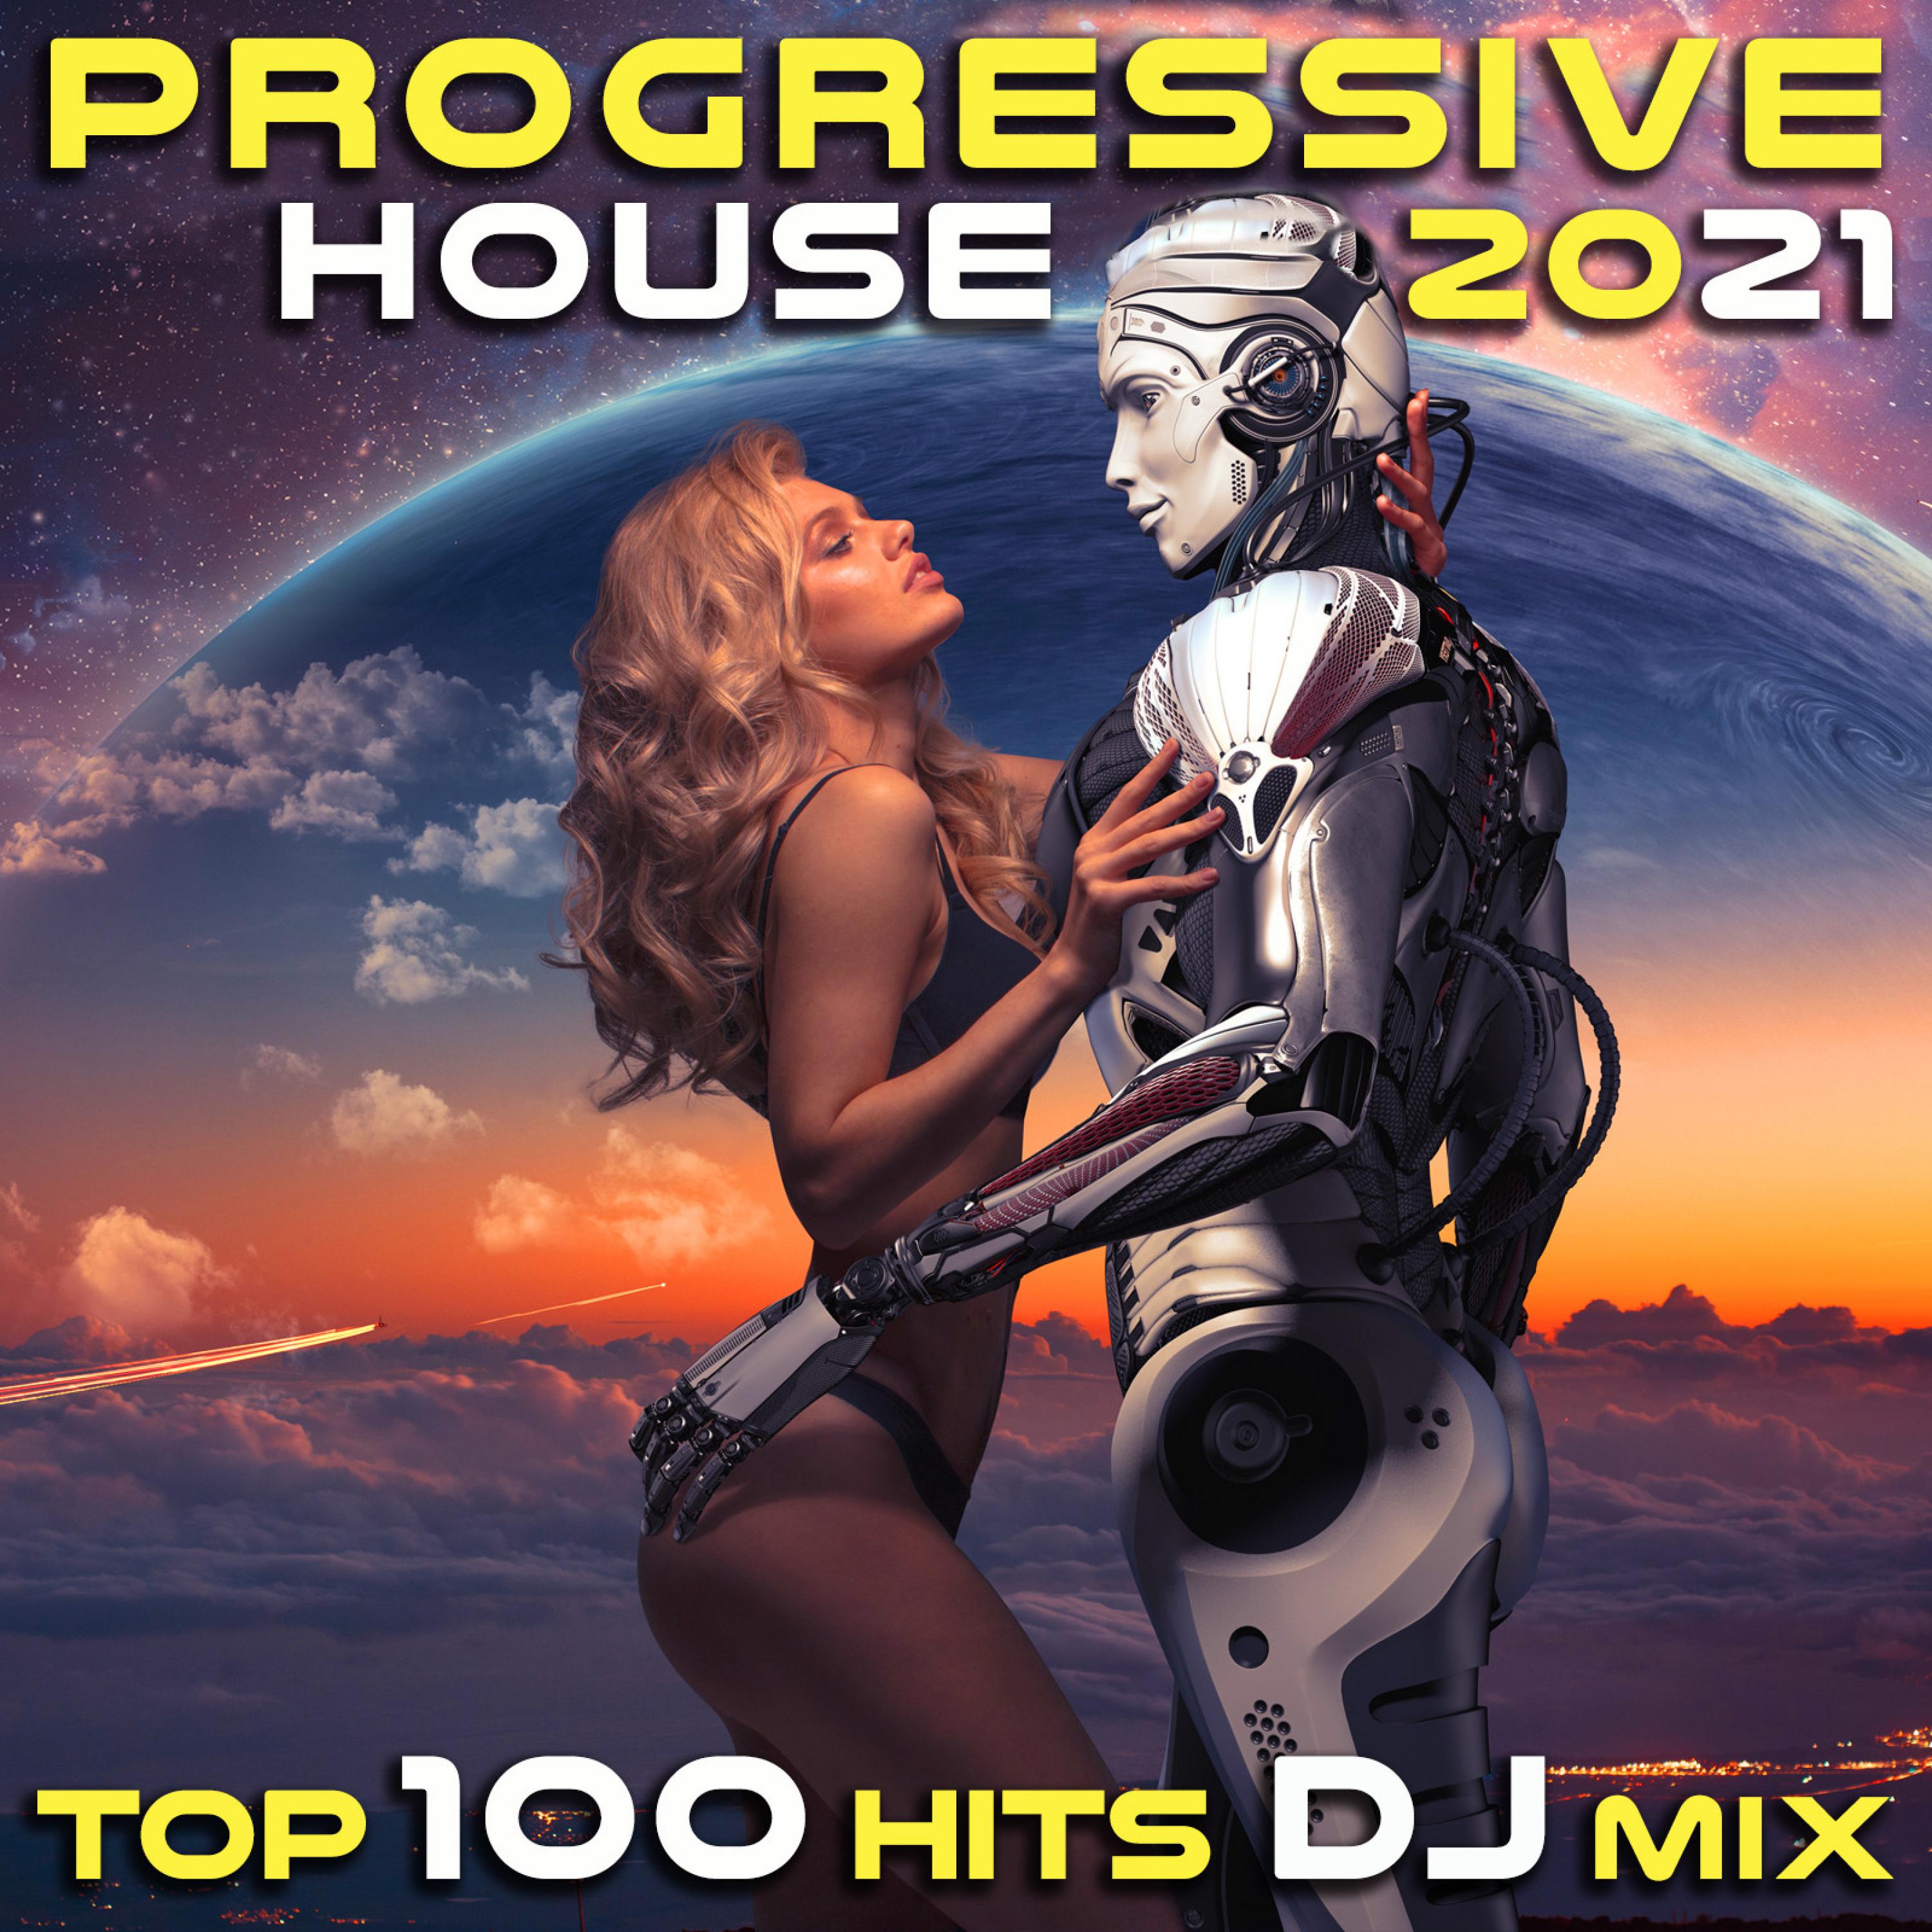 Frank Wizardd - On The Rocks (Progressive House 2021 Top 100 Hits DJ Mixed)